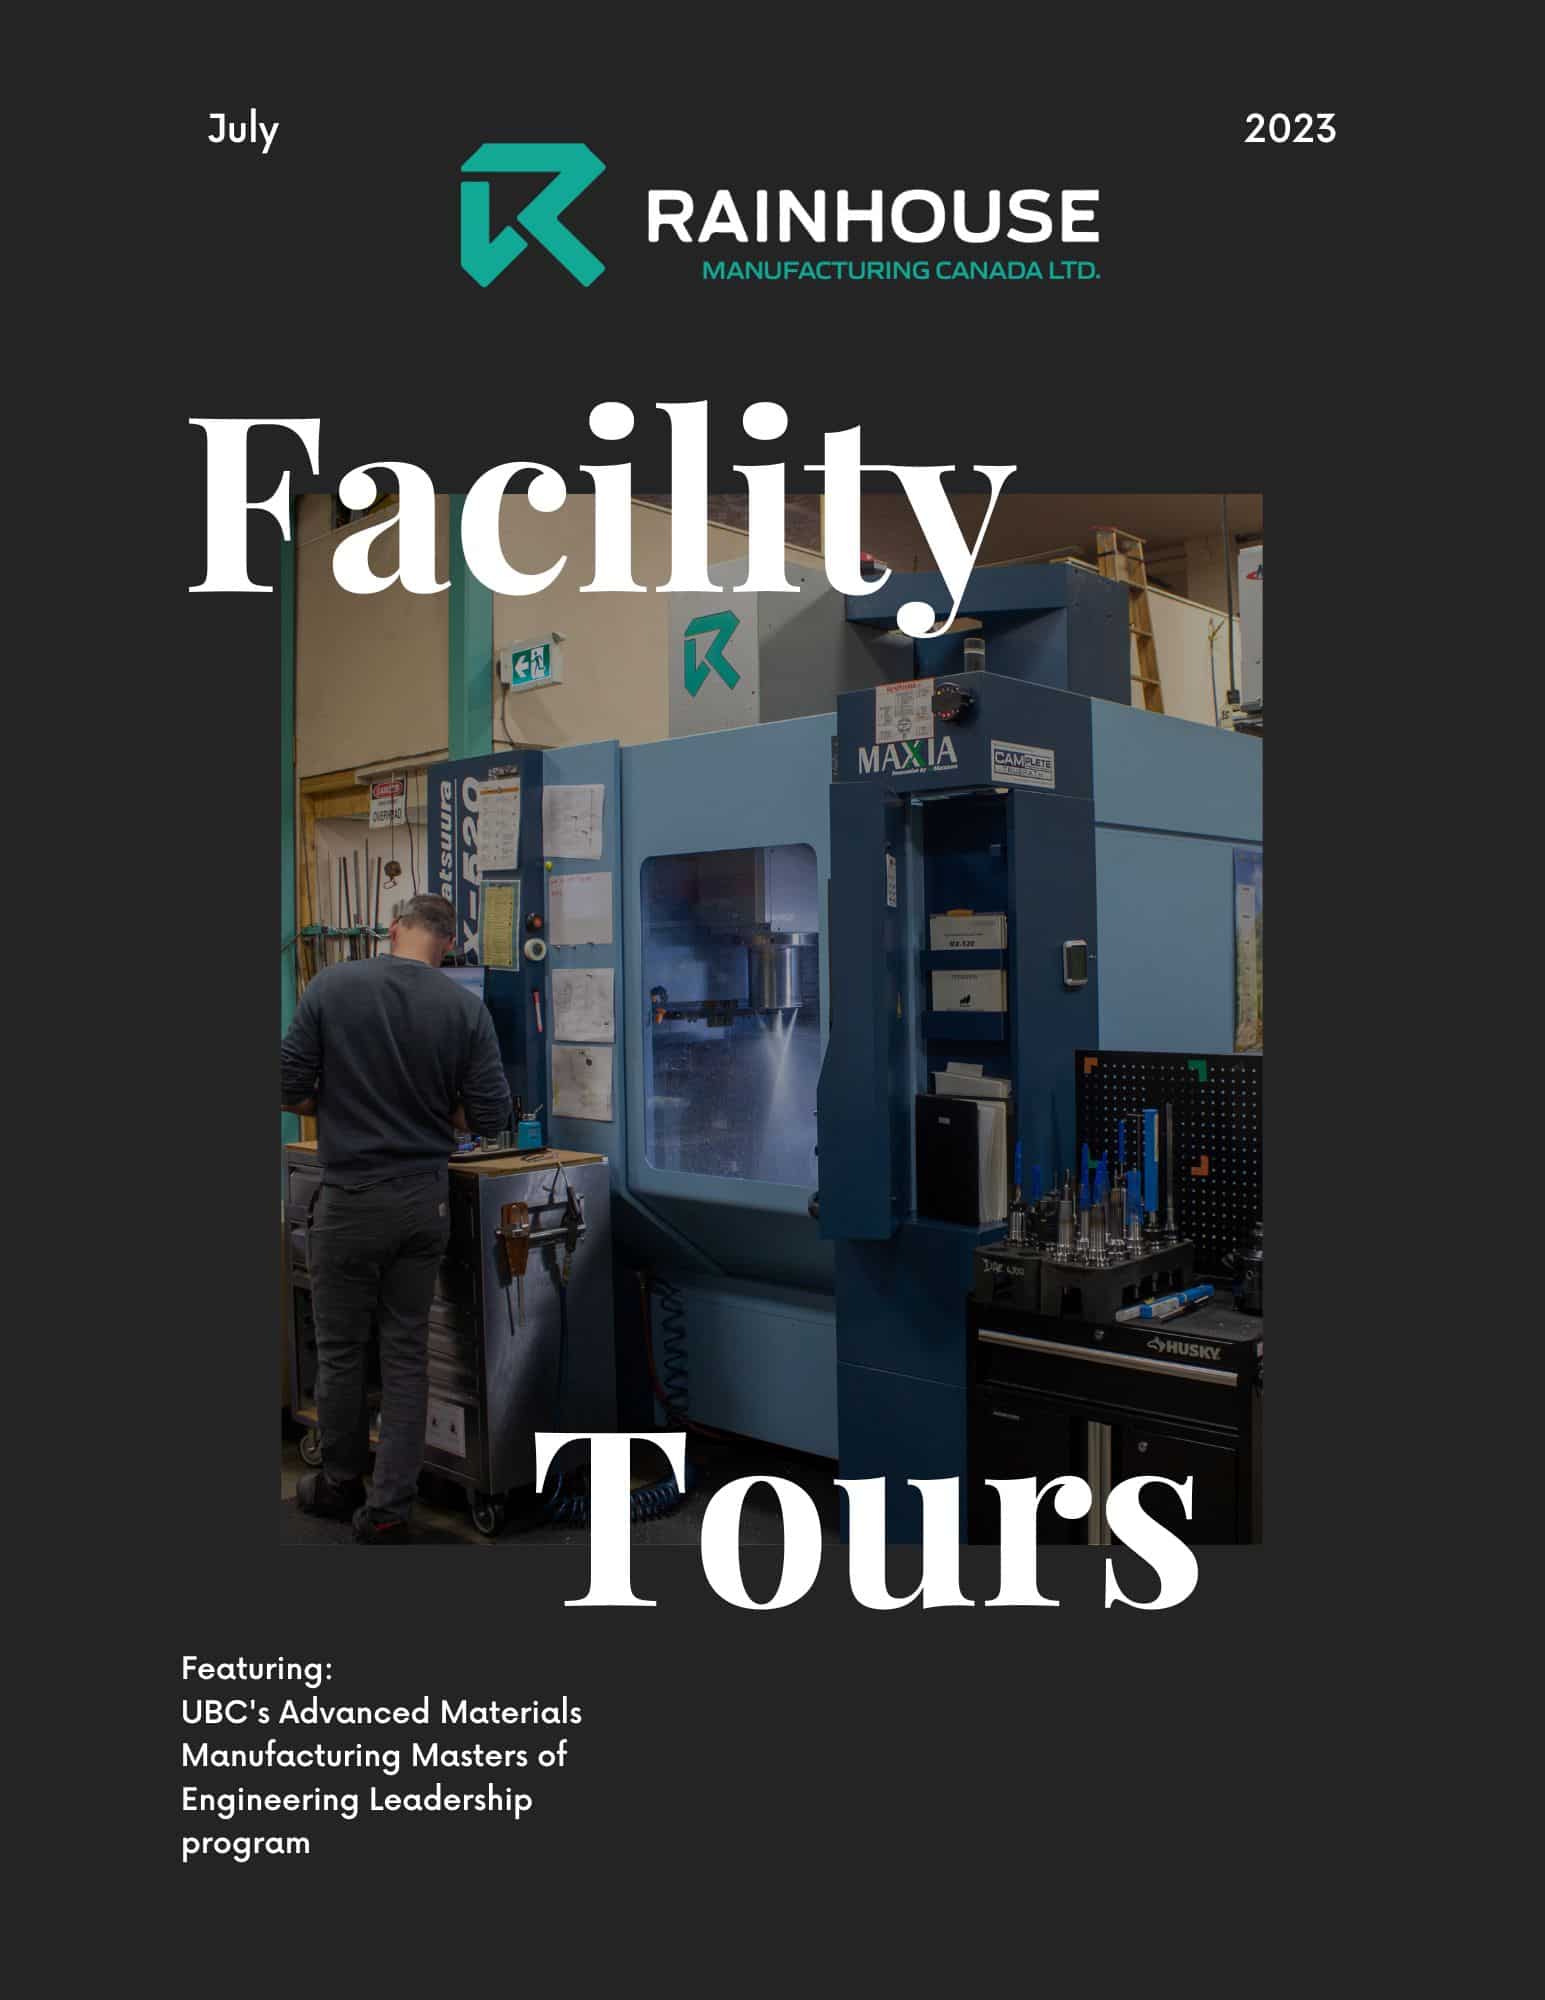 Rainhouse Facility Tours